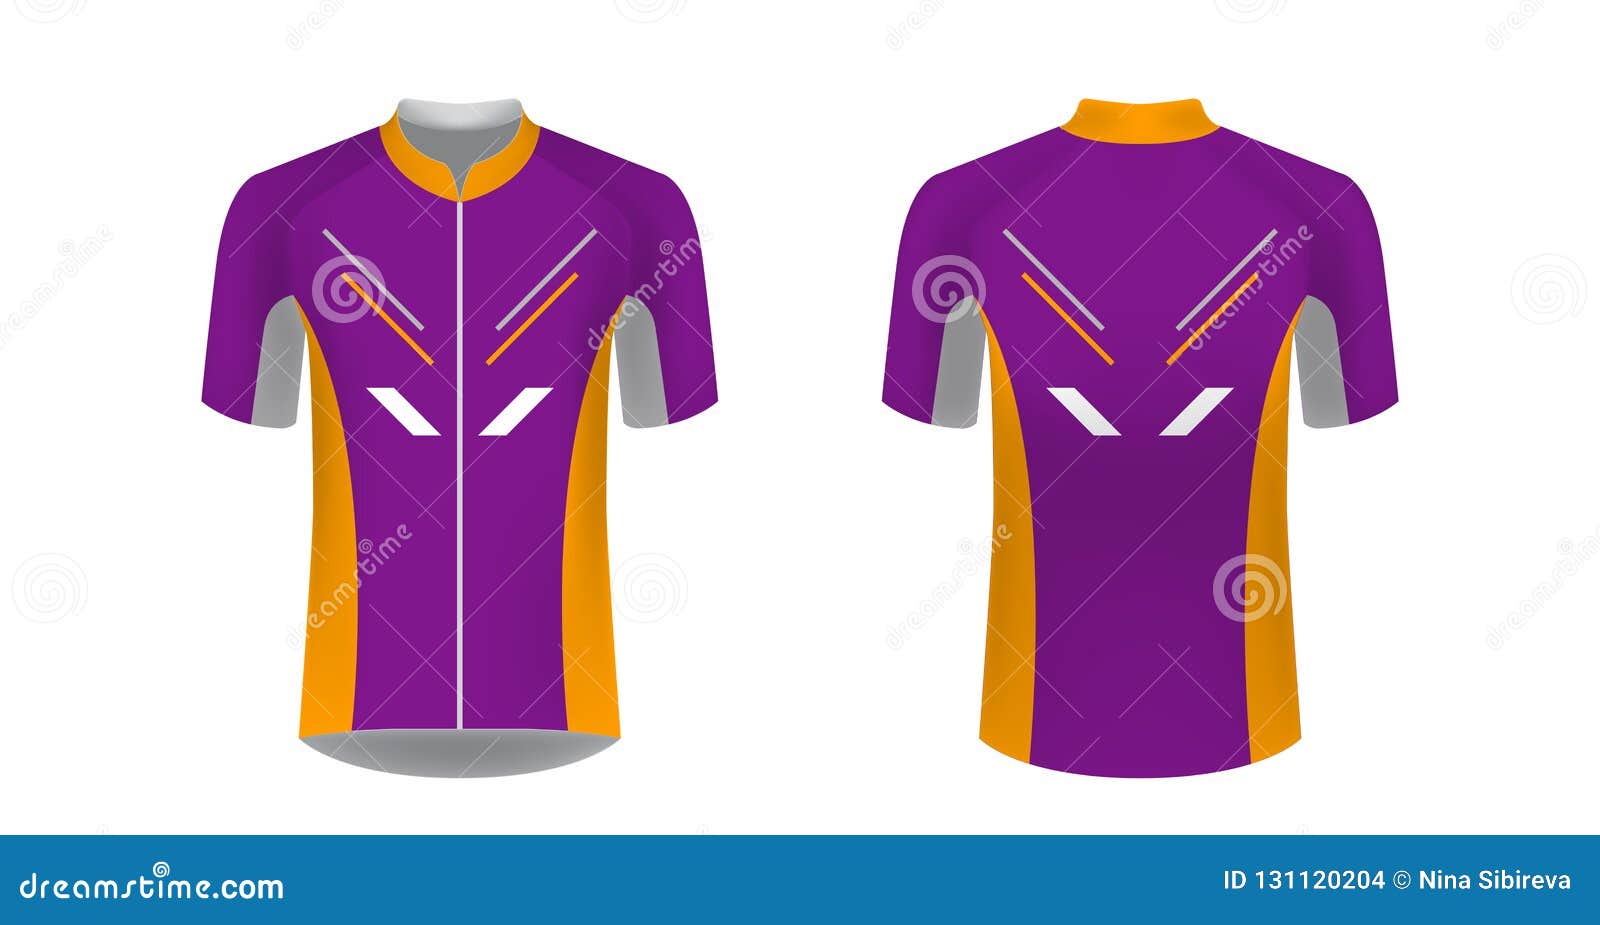 Download Cycling jersey mockup stock illustration. Illustration of ...